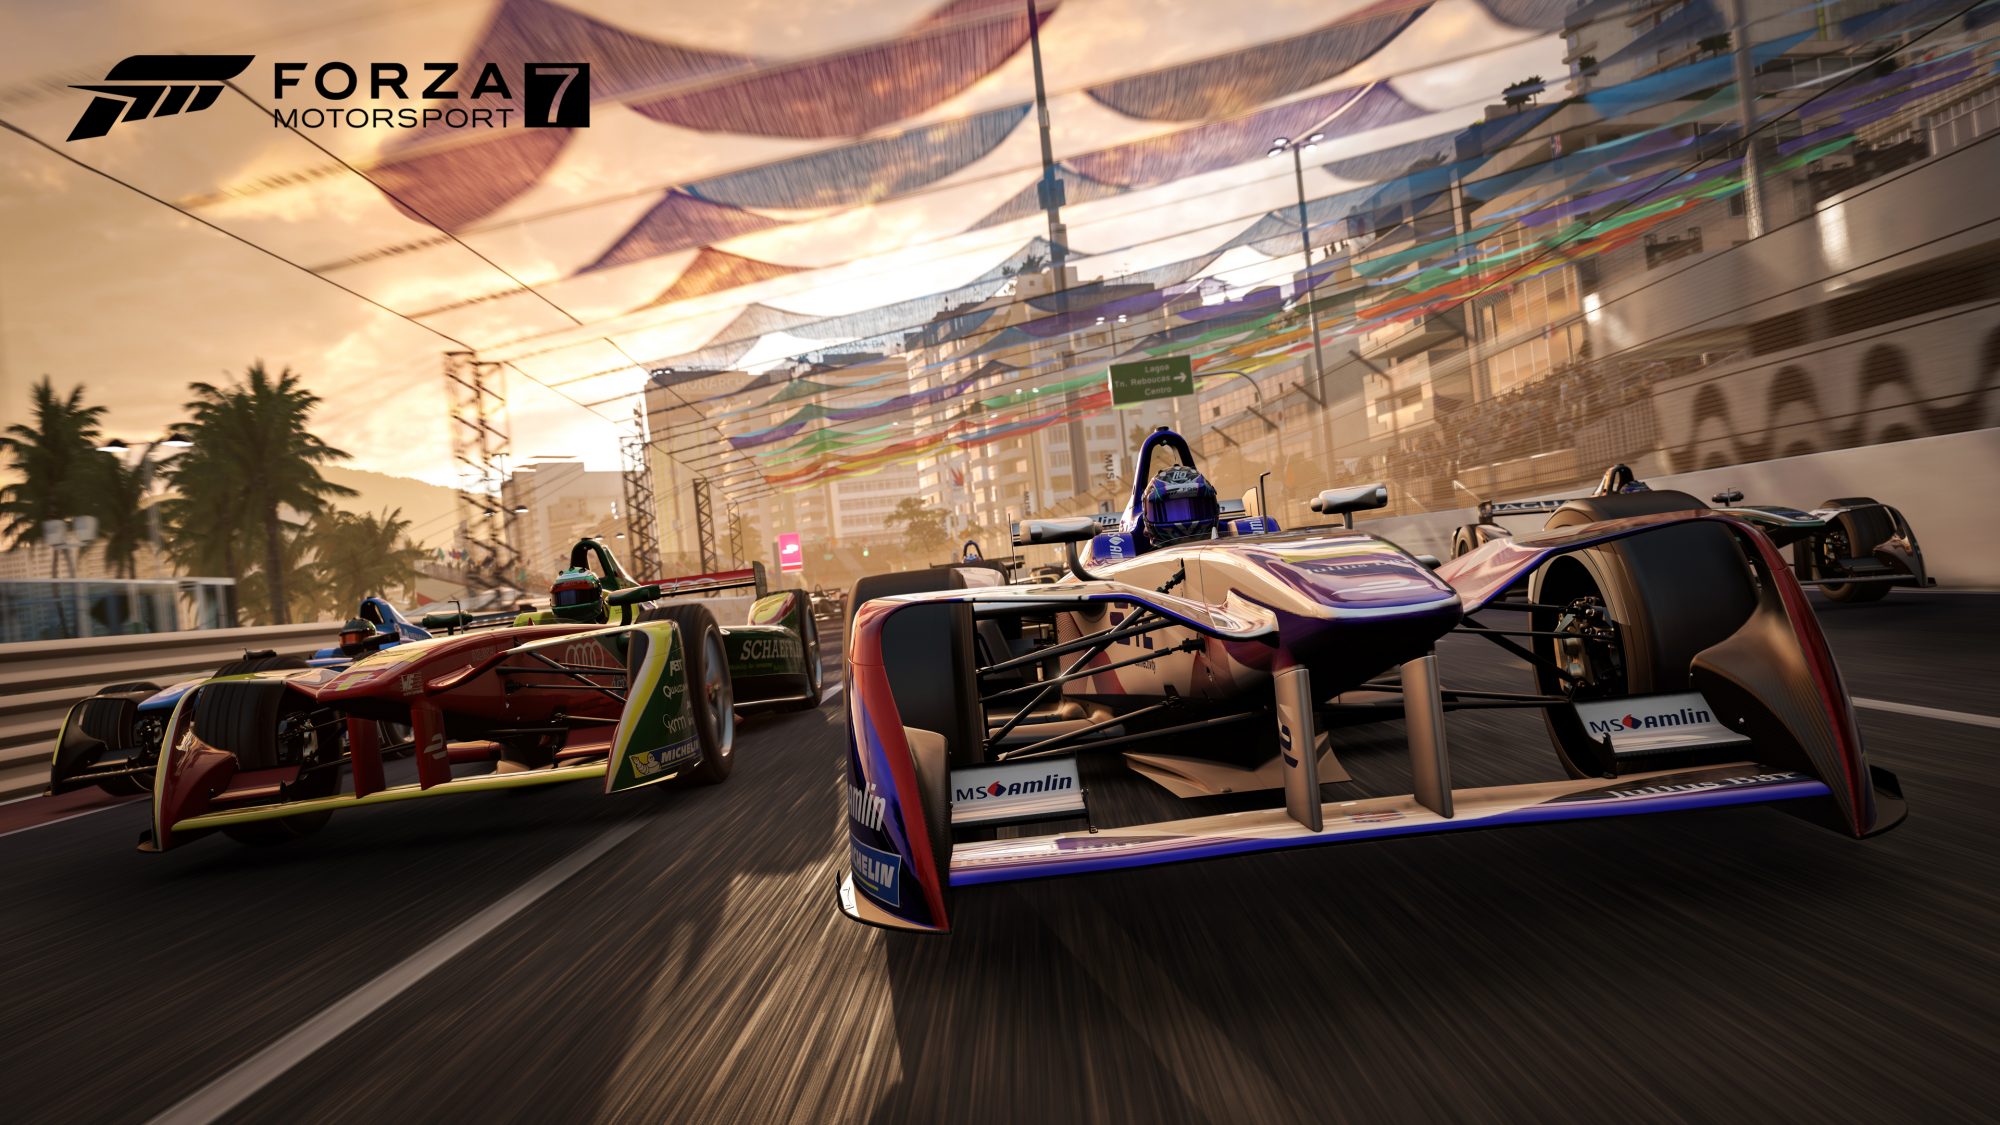 Forza Motorsport 7 Xbox One X PC Review Test 2